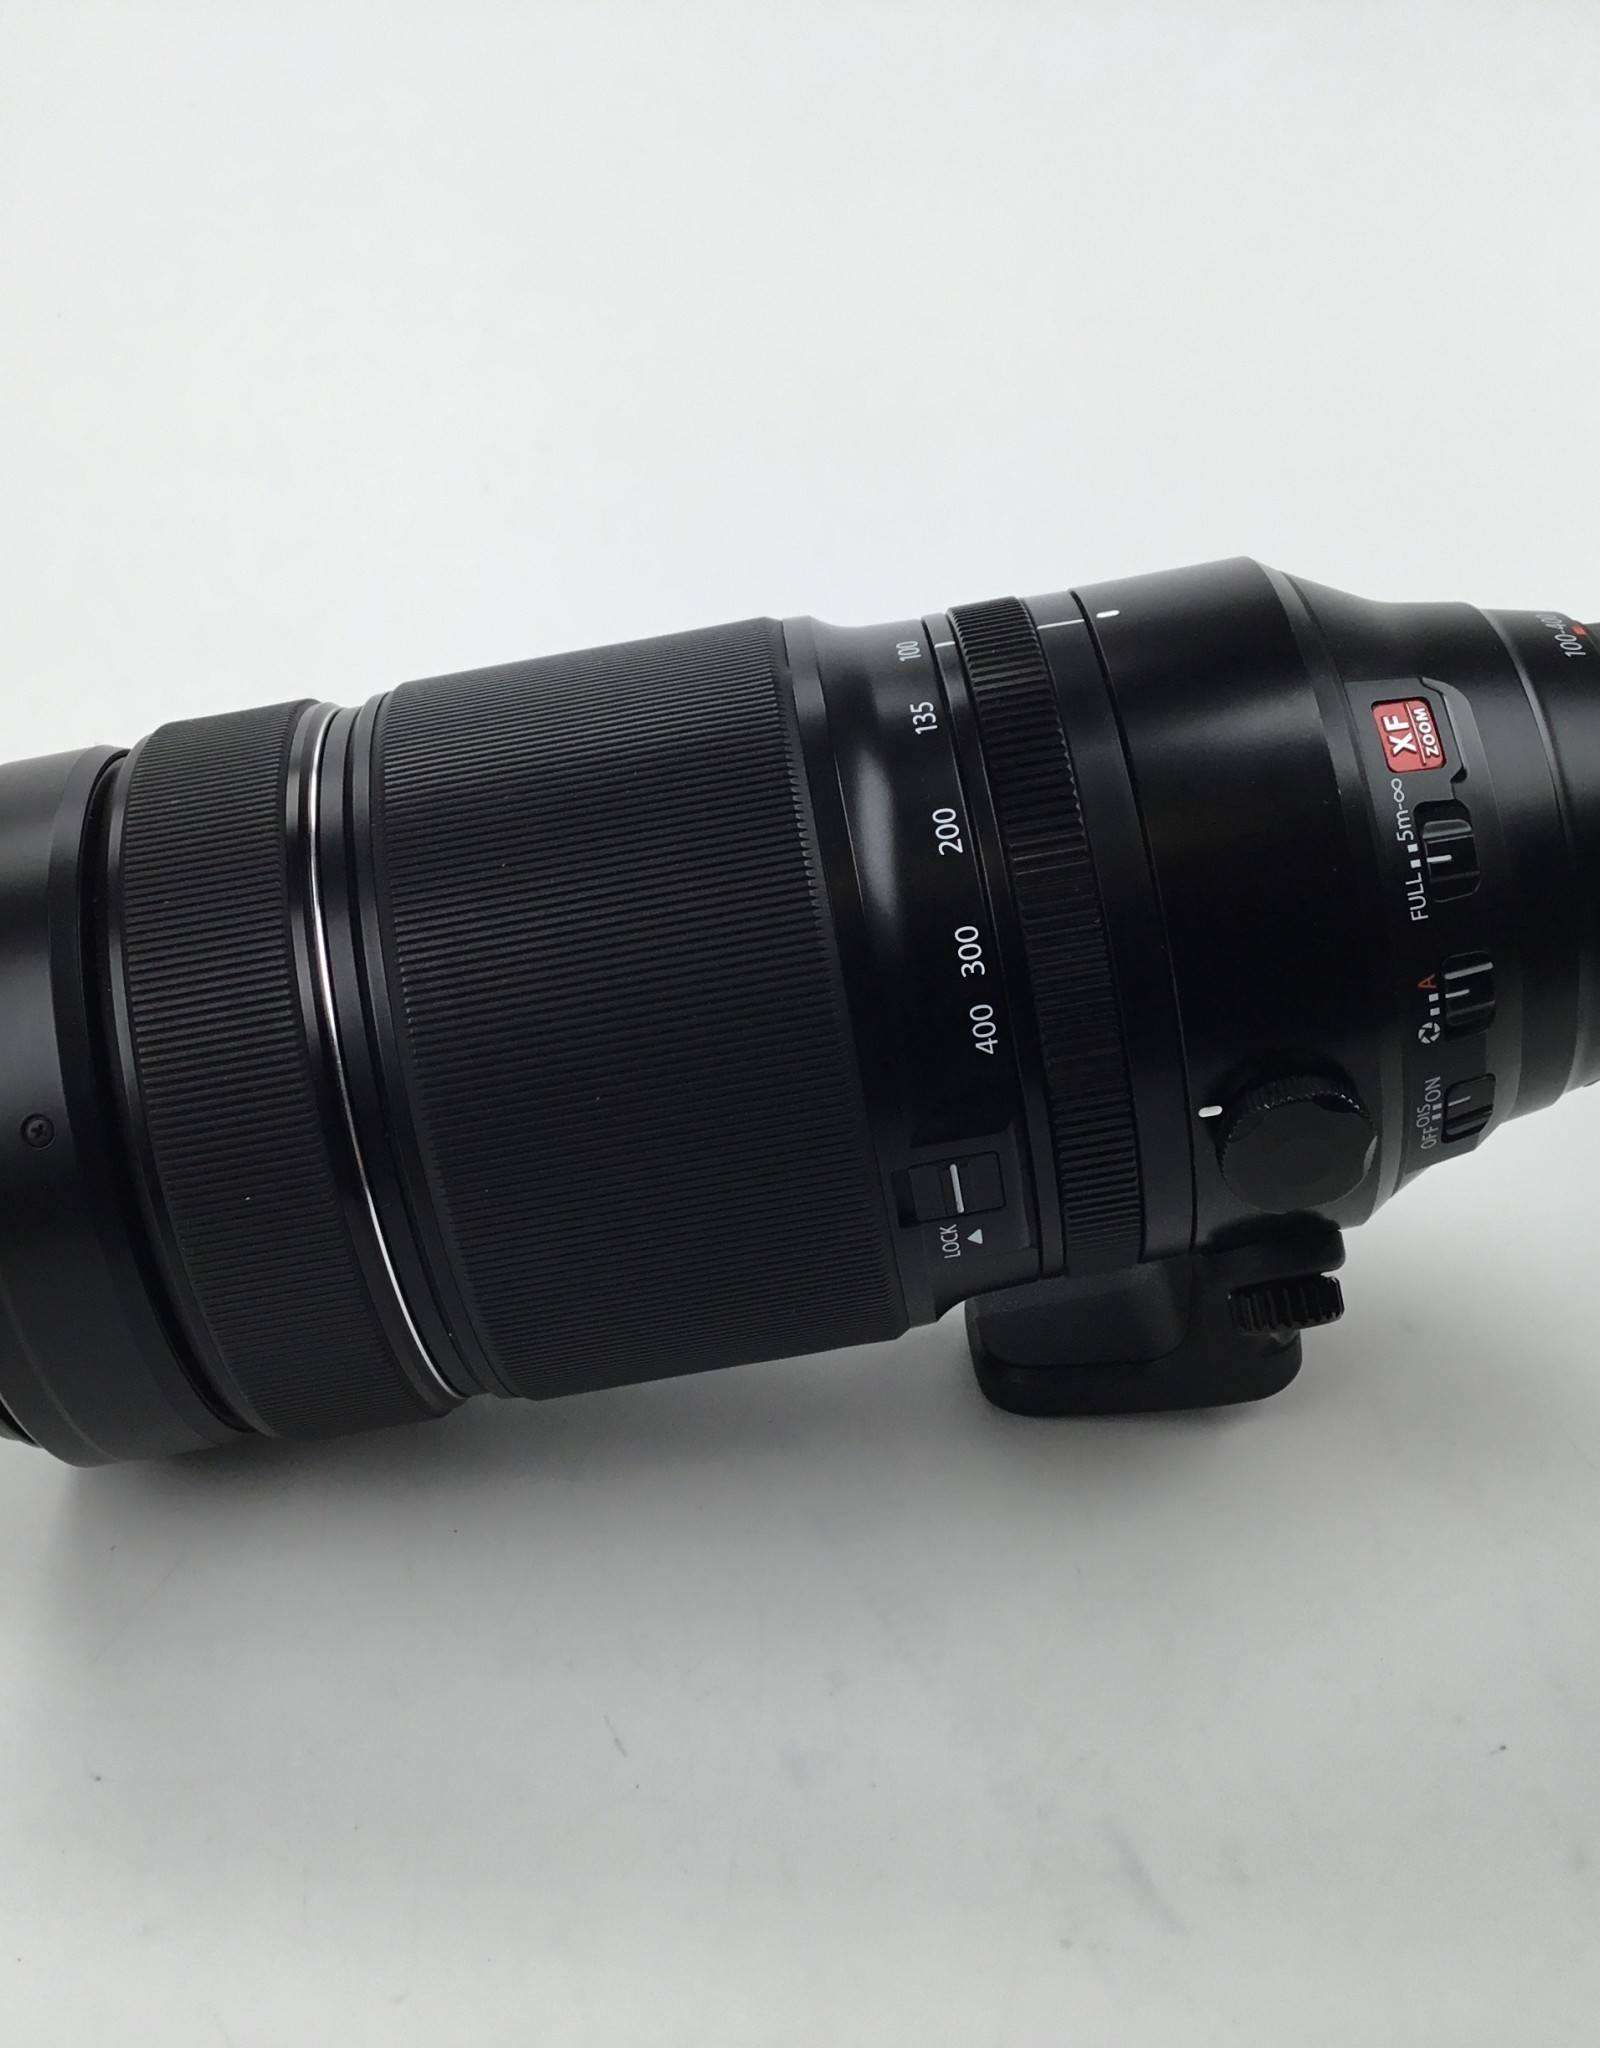 FUJI Fuji XF 100-400mm f4.5-5.6 R LM OIS WR Lens Used Good